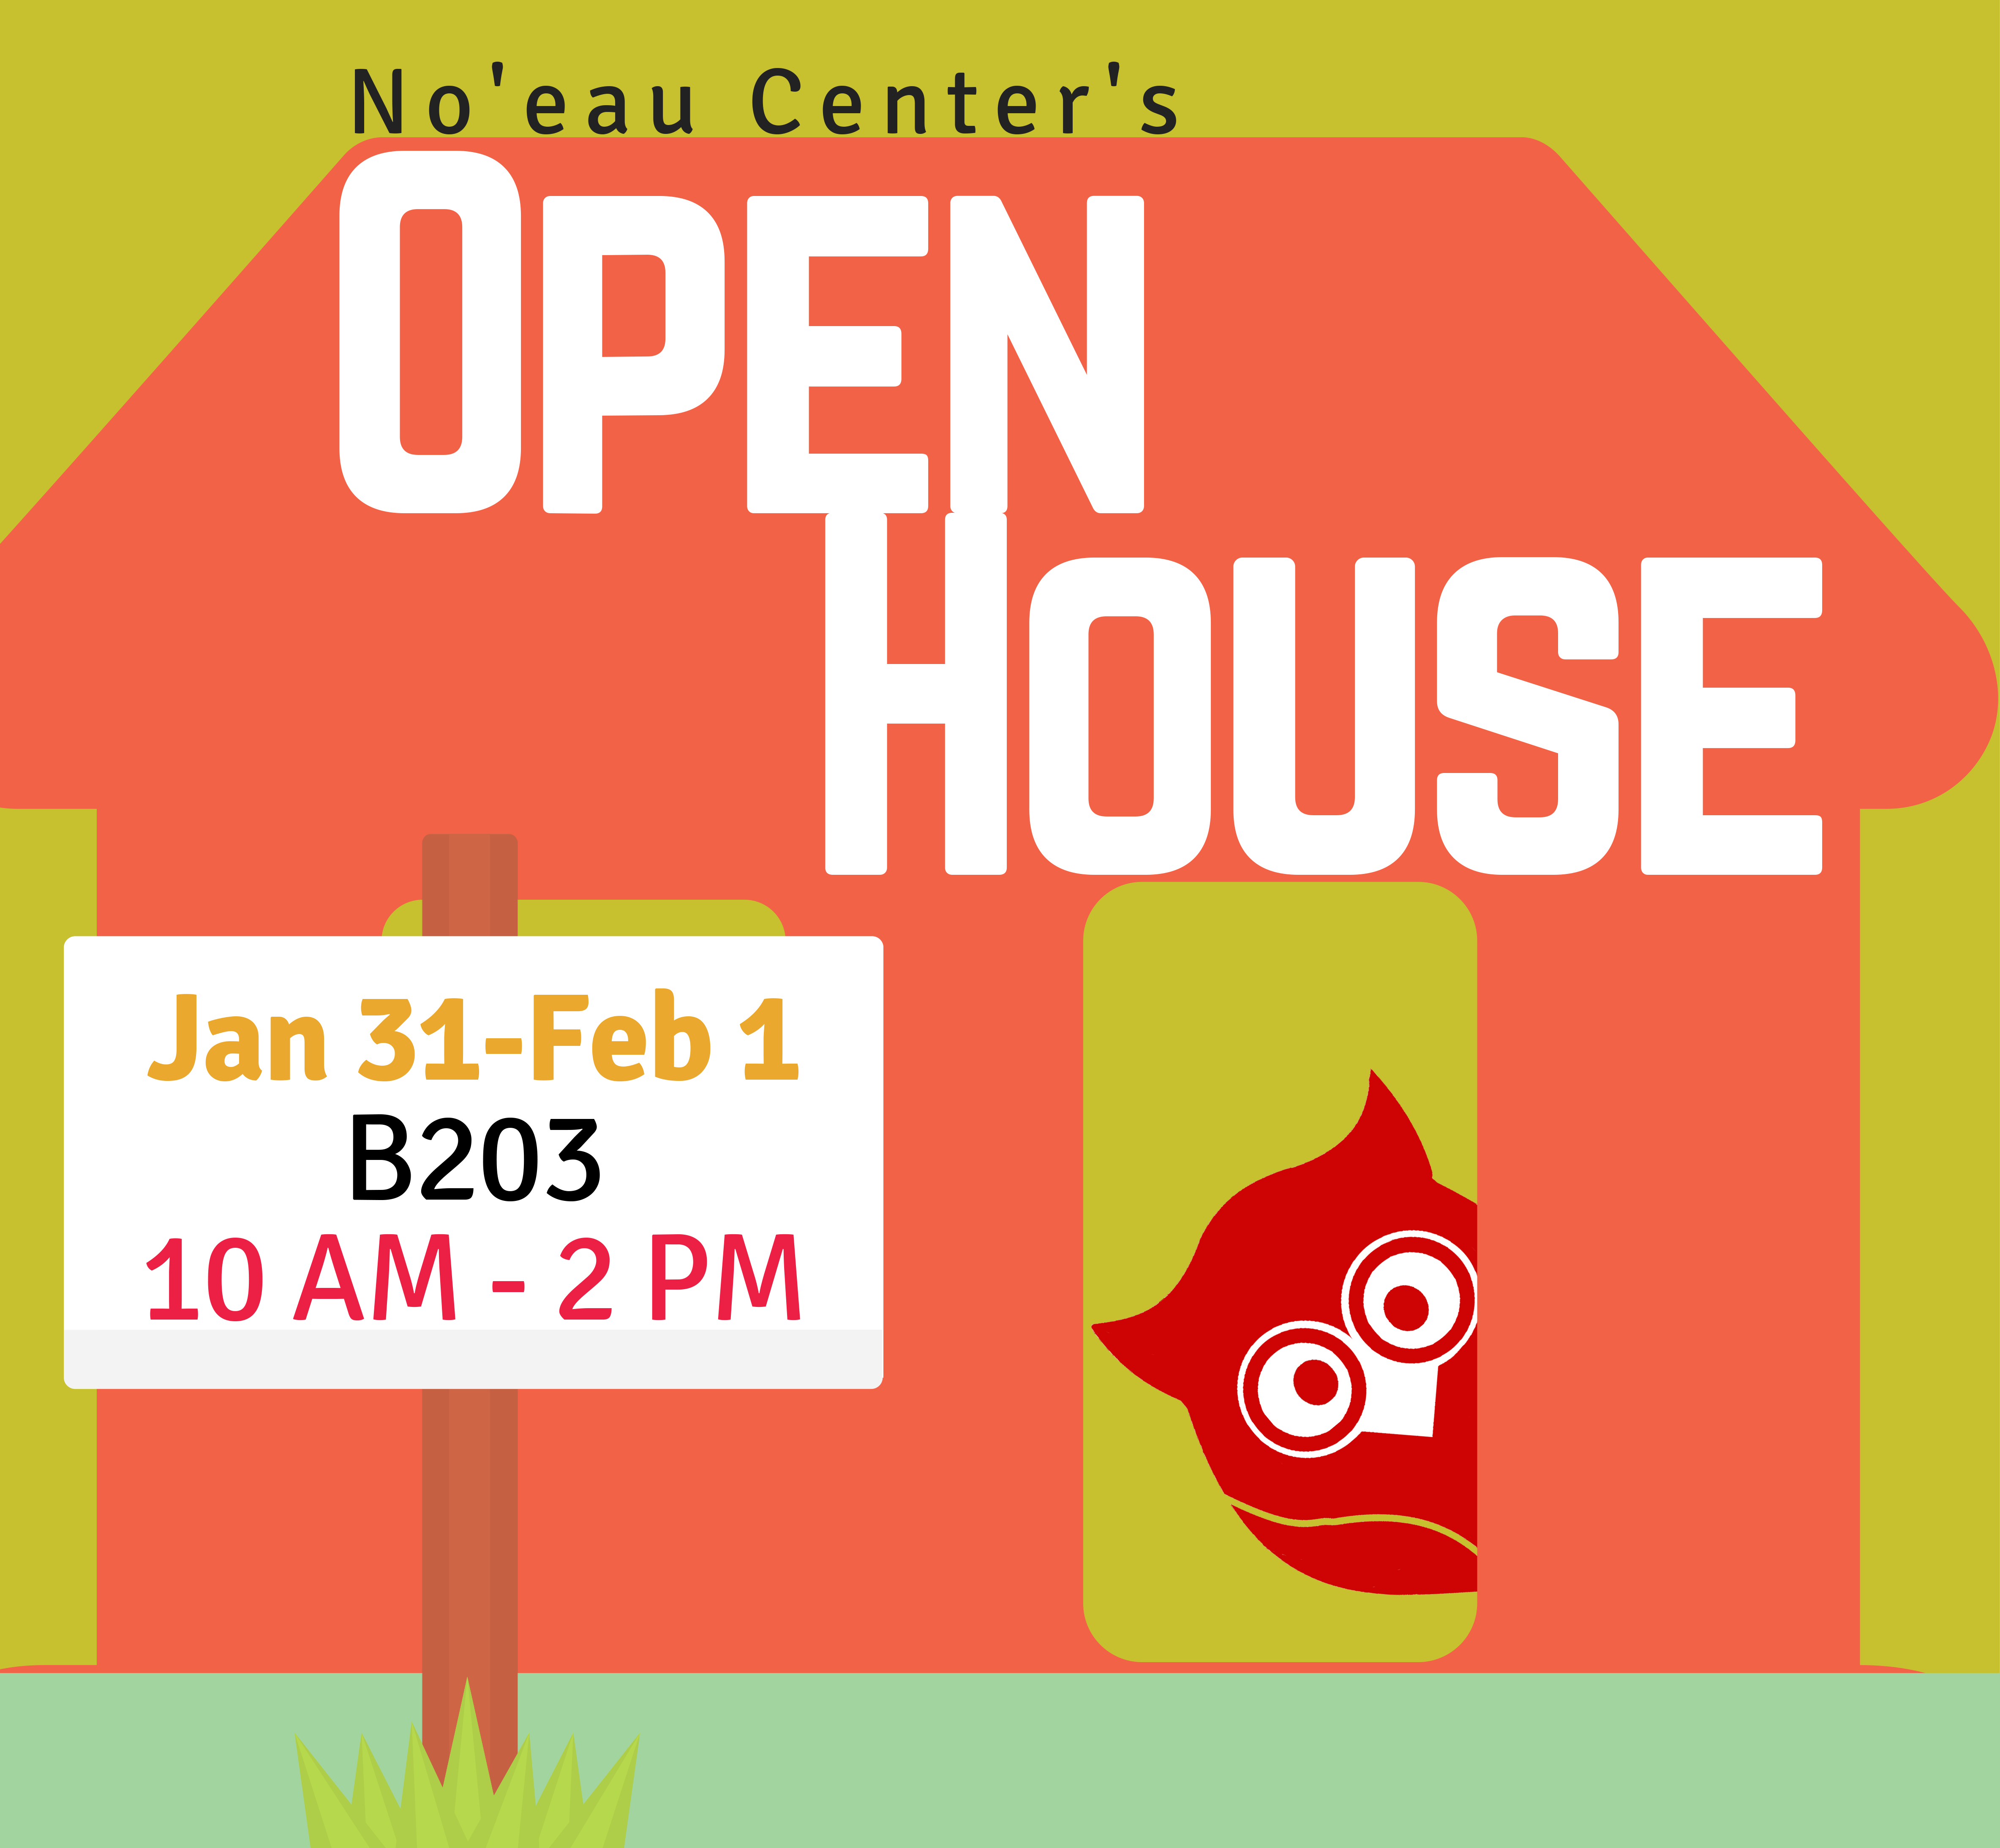 No‘eau Center Open House on Jan. 31-Feb. 1